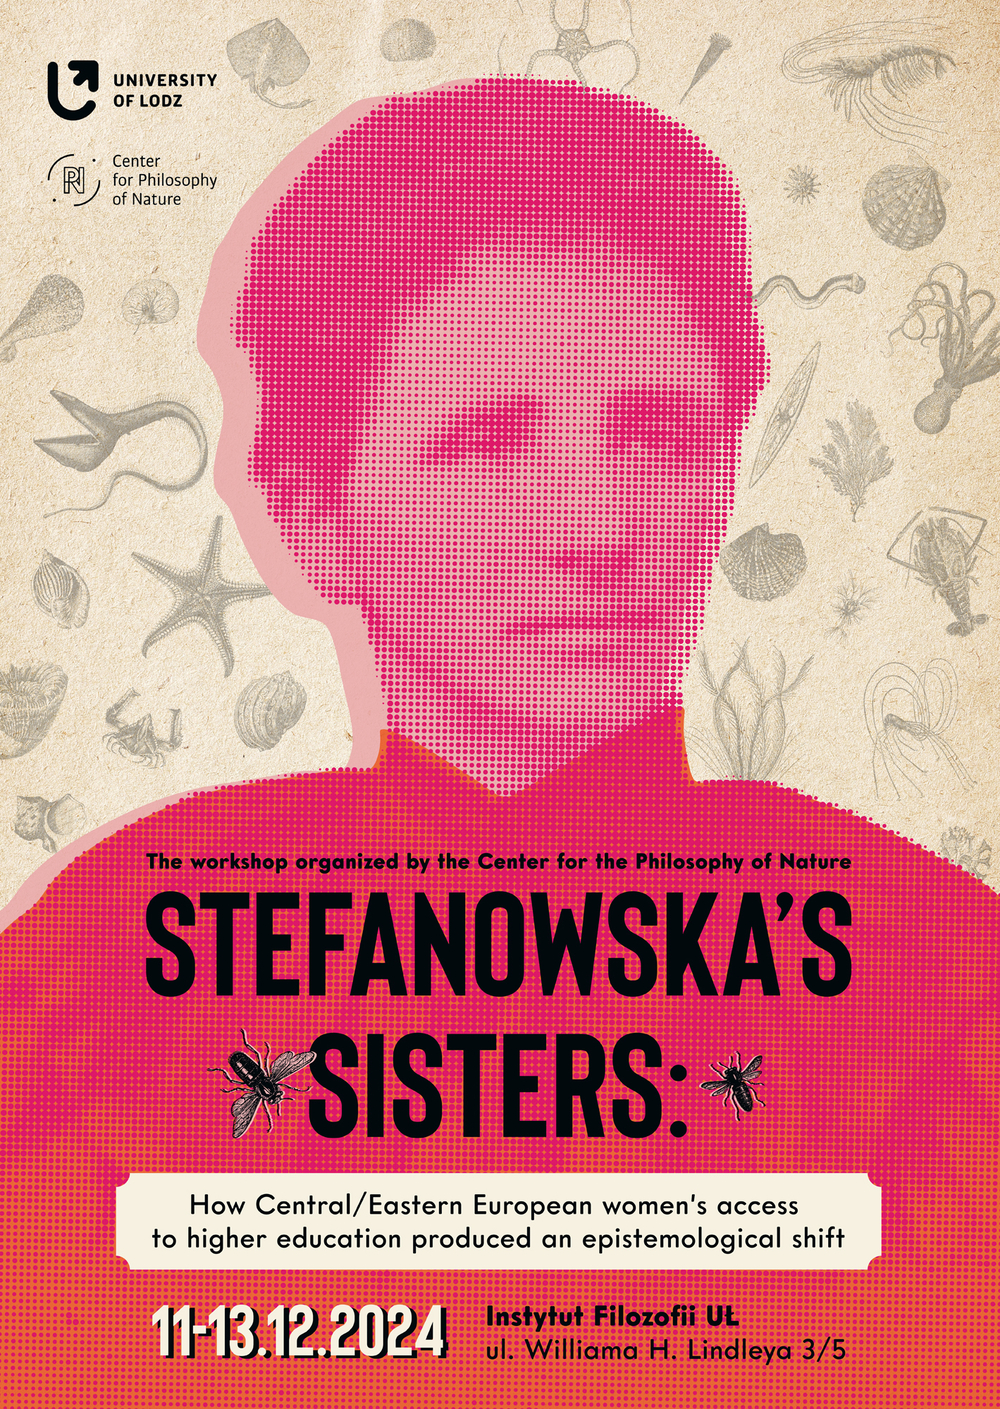 Plakat wydarzenia: “STEFANOWSKA’S SISTERS:” HOW CENTRAL/EASTERN EUROPEAN WOMEN’S ACCESS TO HIGHER EDUCATION PRODUCED AN EPISTEMOLOGICAL SHIFT